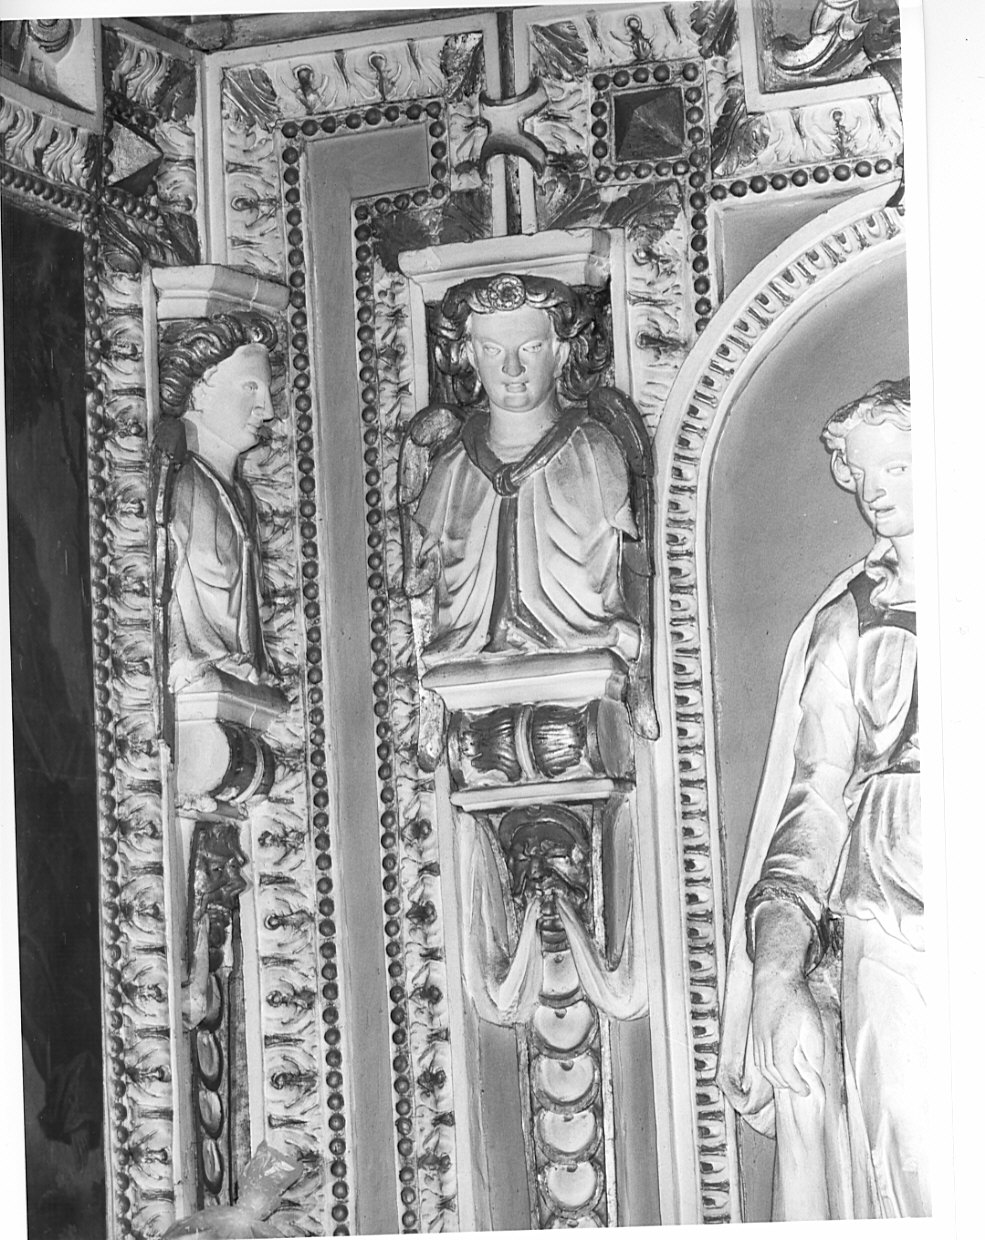 motivi decorativi a grottesche (decorazione plastica) di Bianchi Giuseppe, Borseri Martino, Fontana Giuseppe, Bianchi Pompeo (secc. XVI/ XVII)